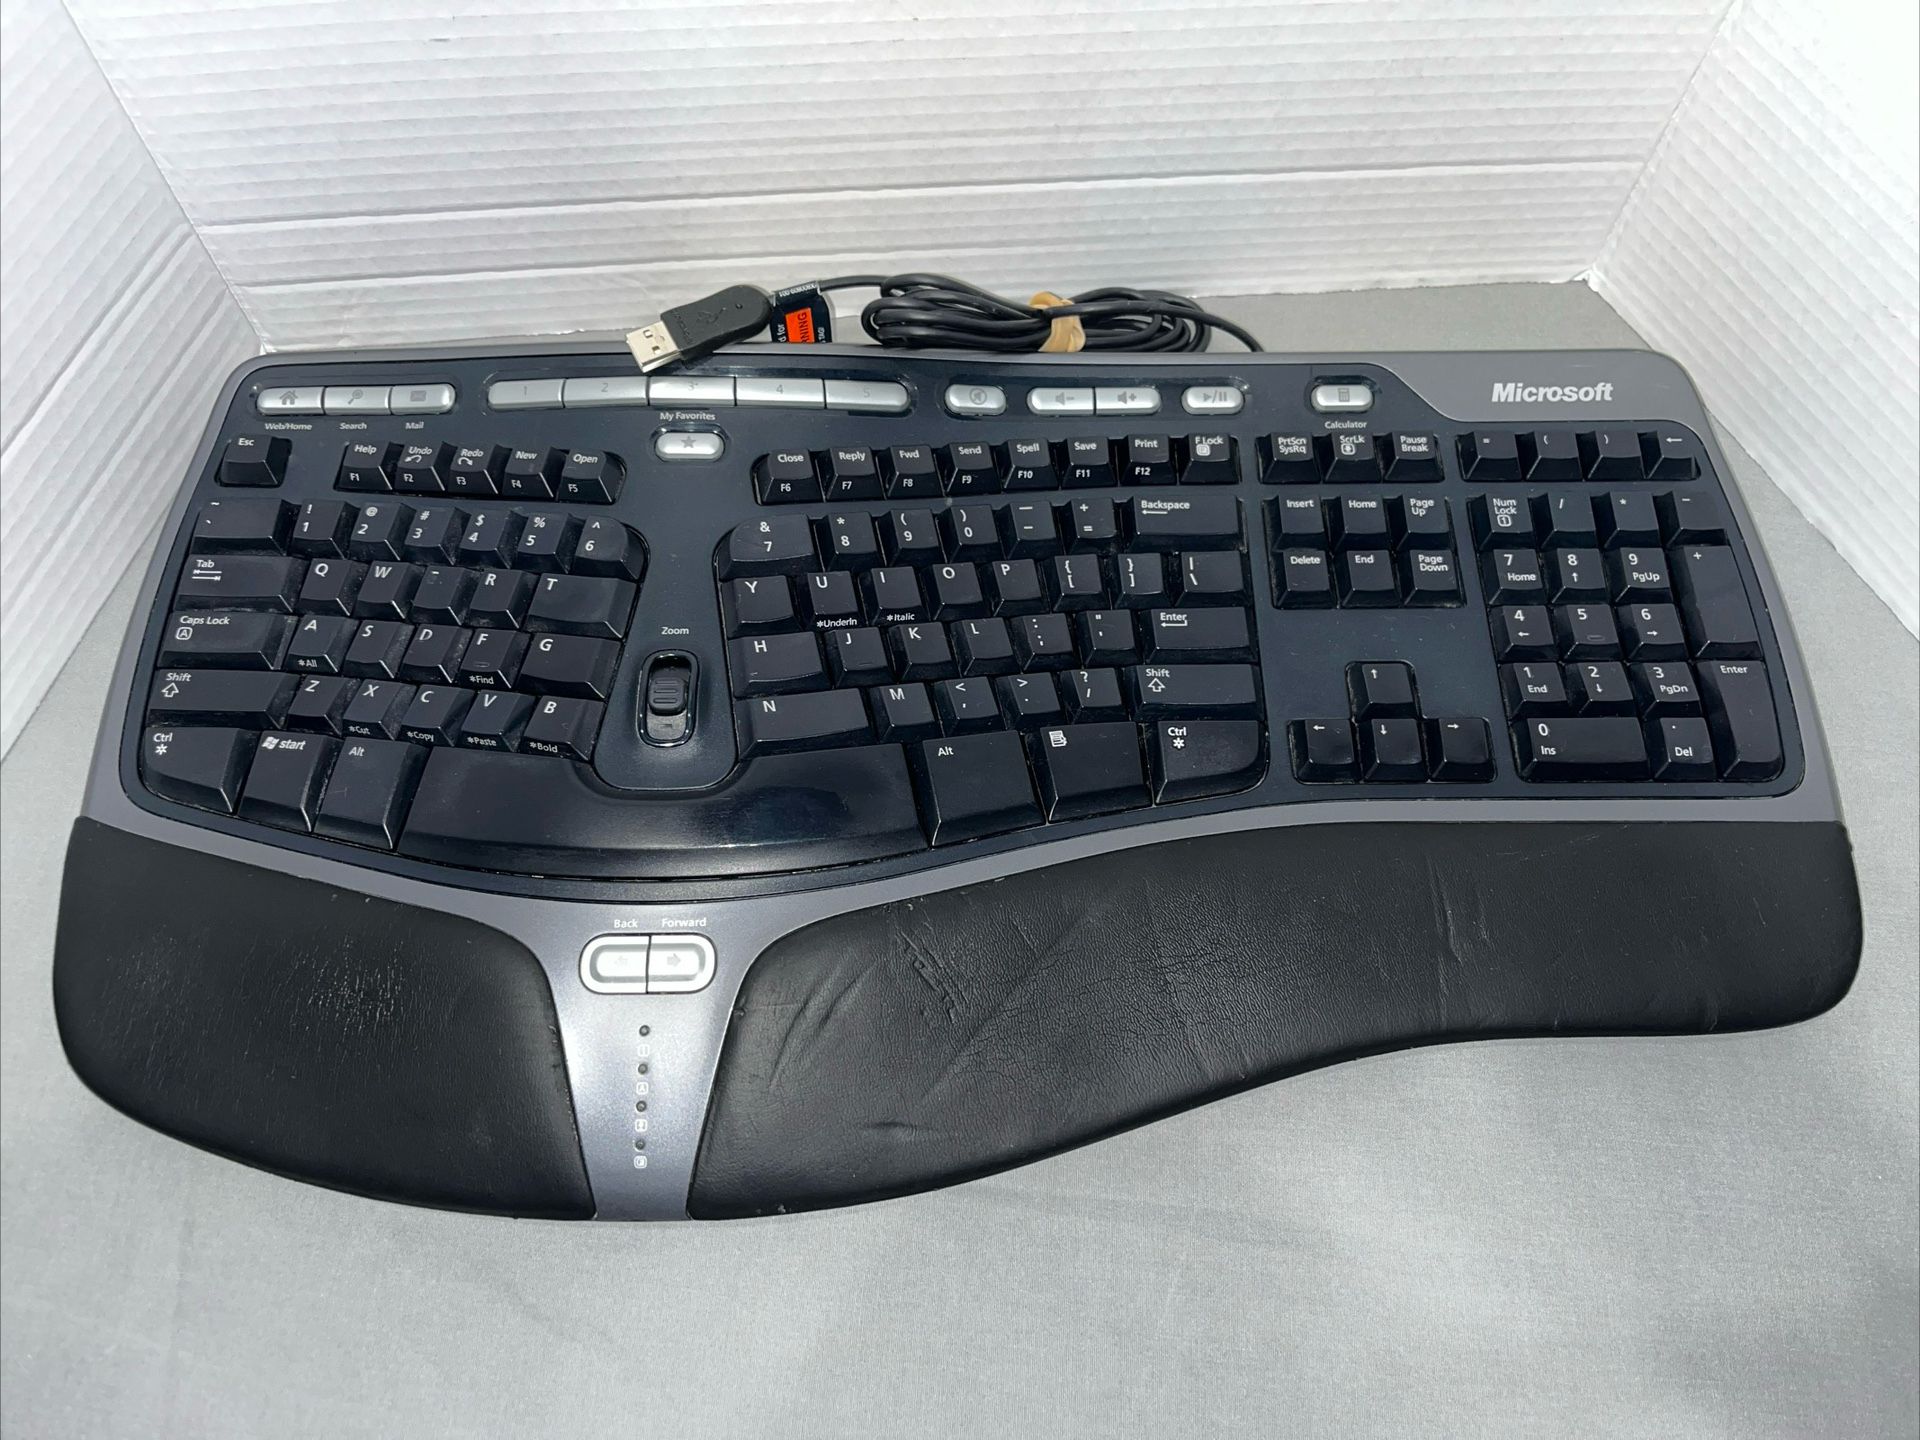 Microsoft Natural Ergonomic USB Wired Keyboard 4000 V1.0 Black Tested Works